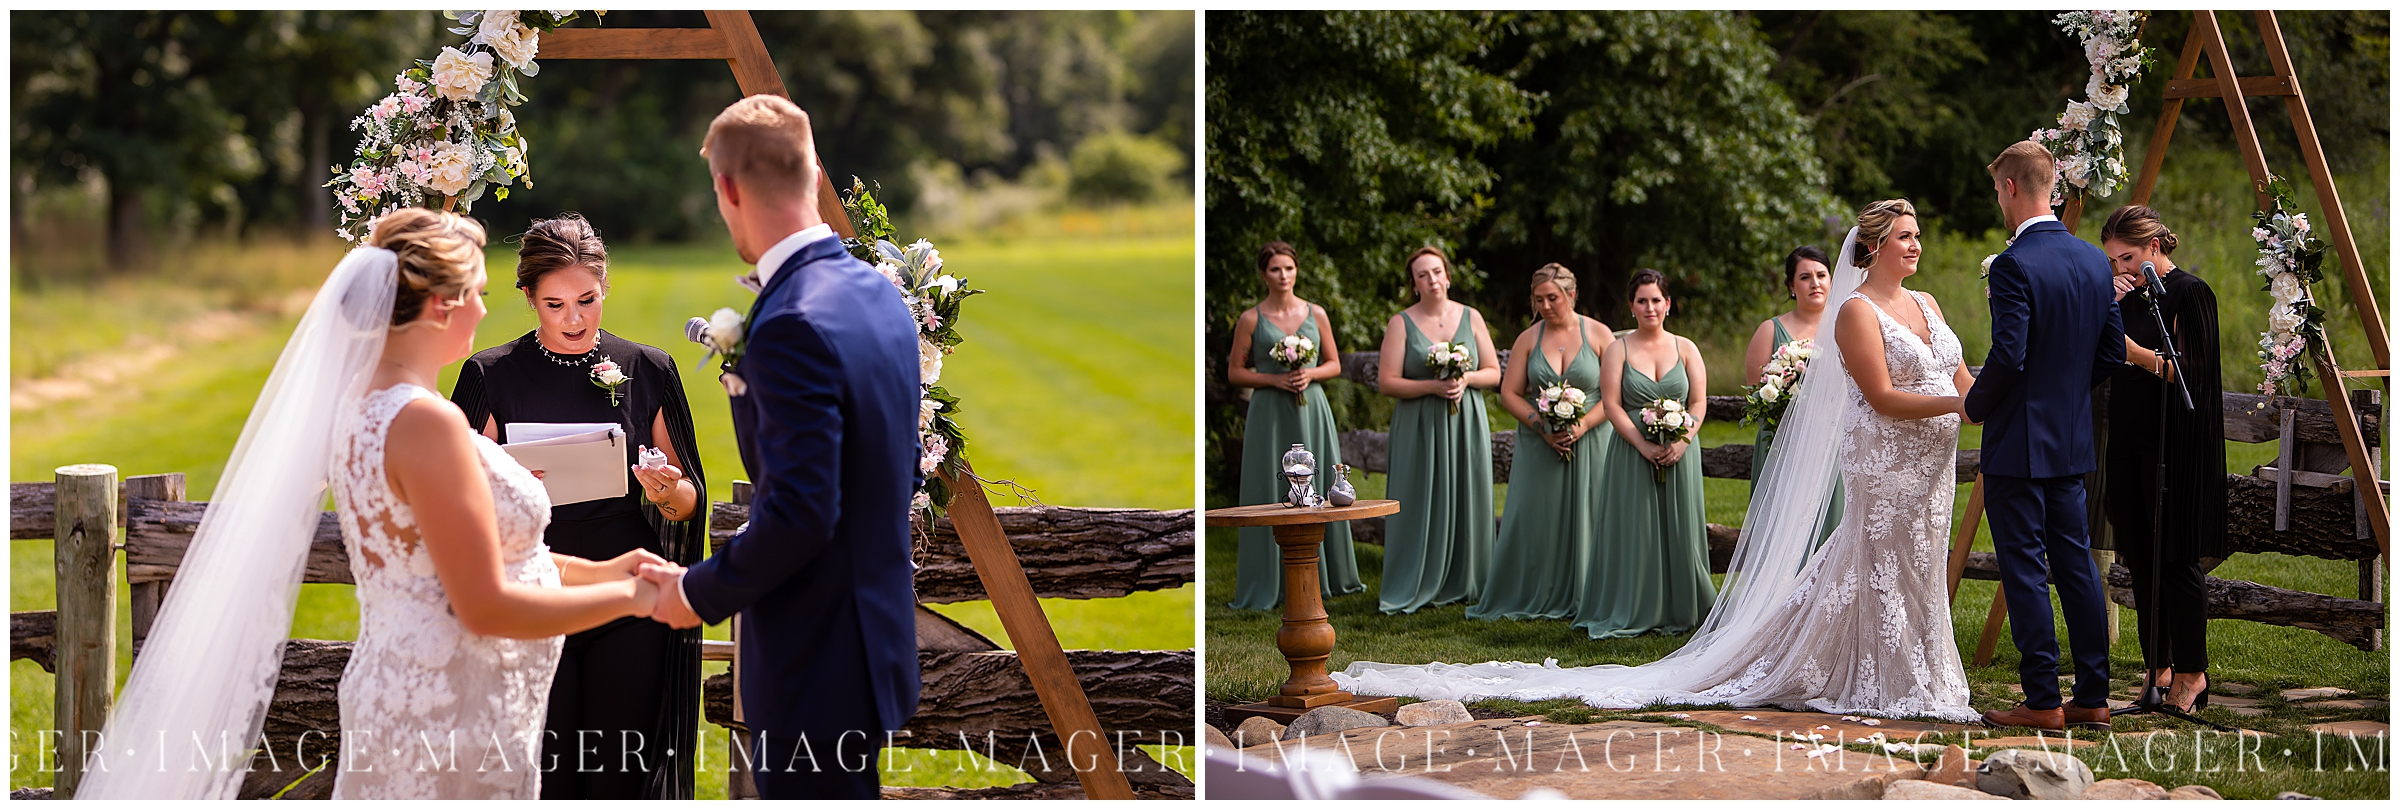 sage green and blush outdoor wedding, fair oaks farm